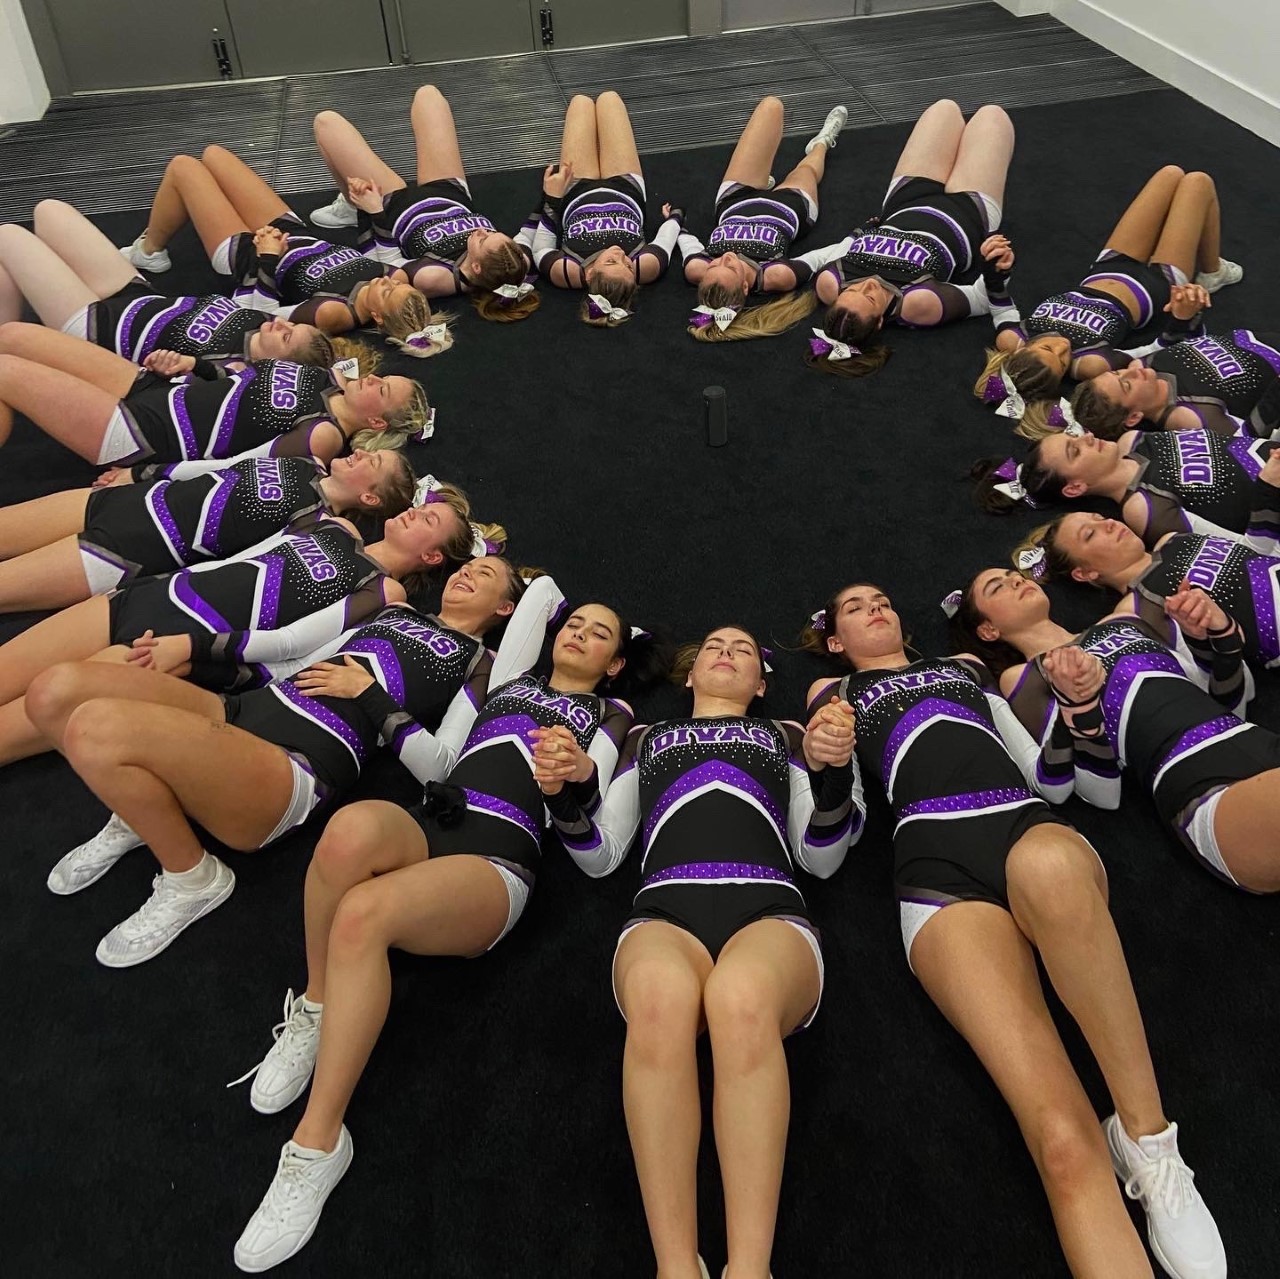 Cheer team lying down